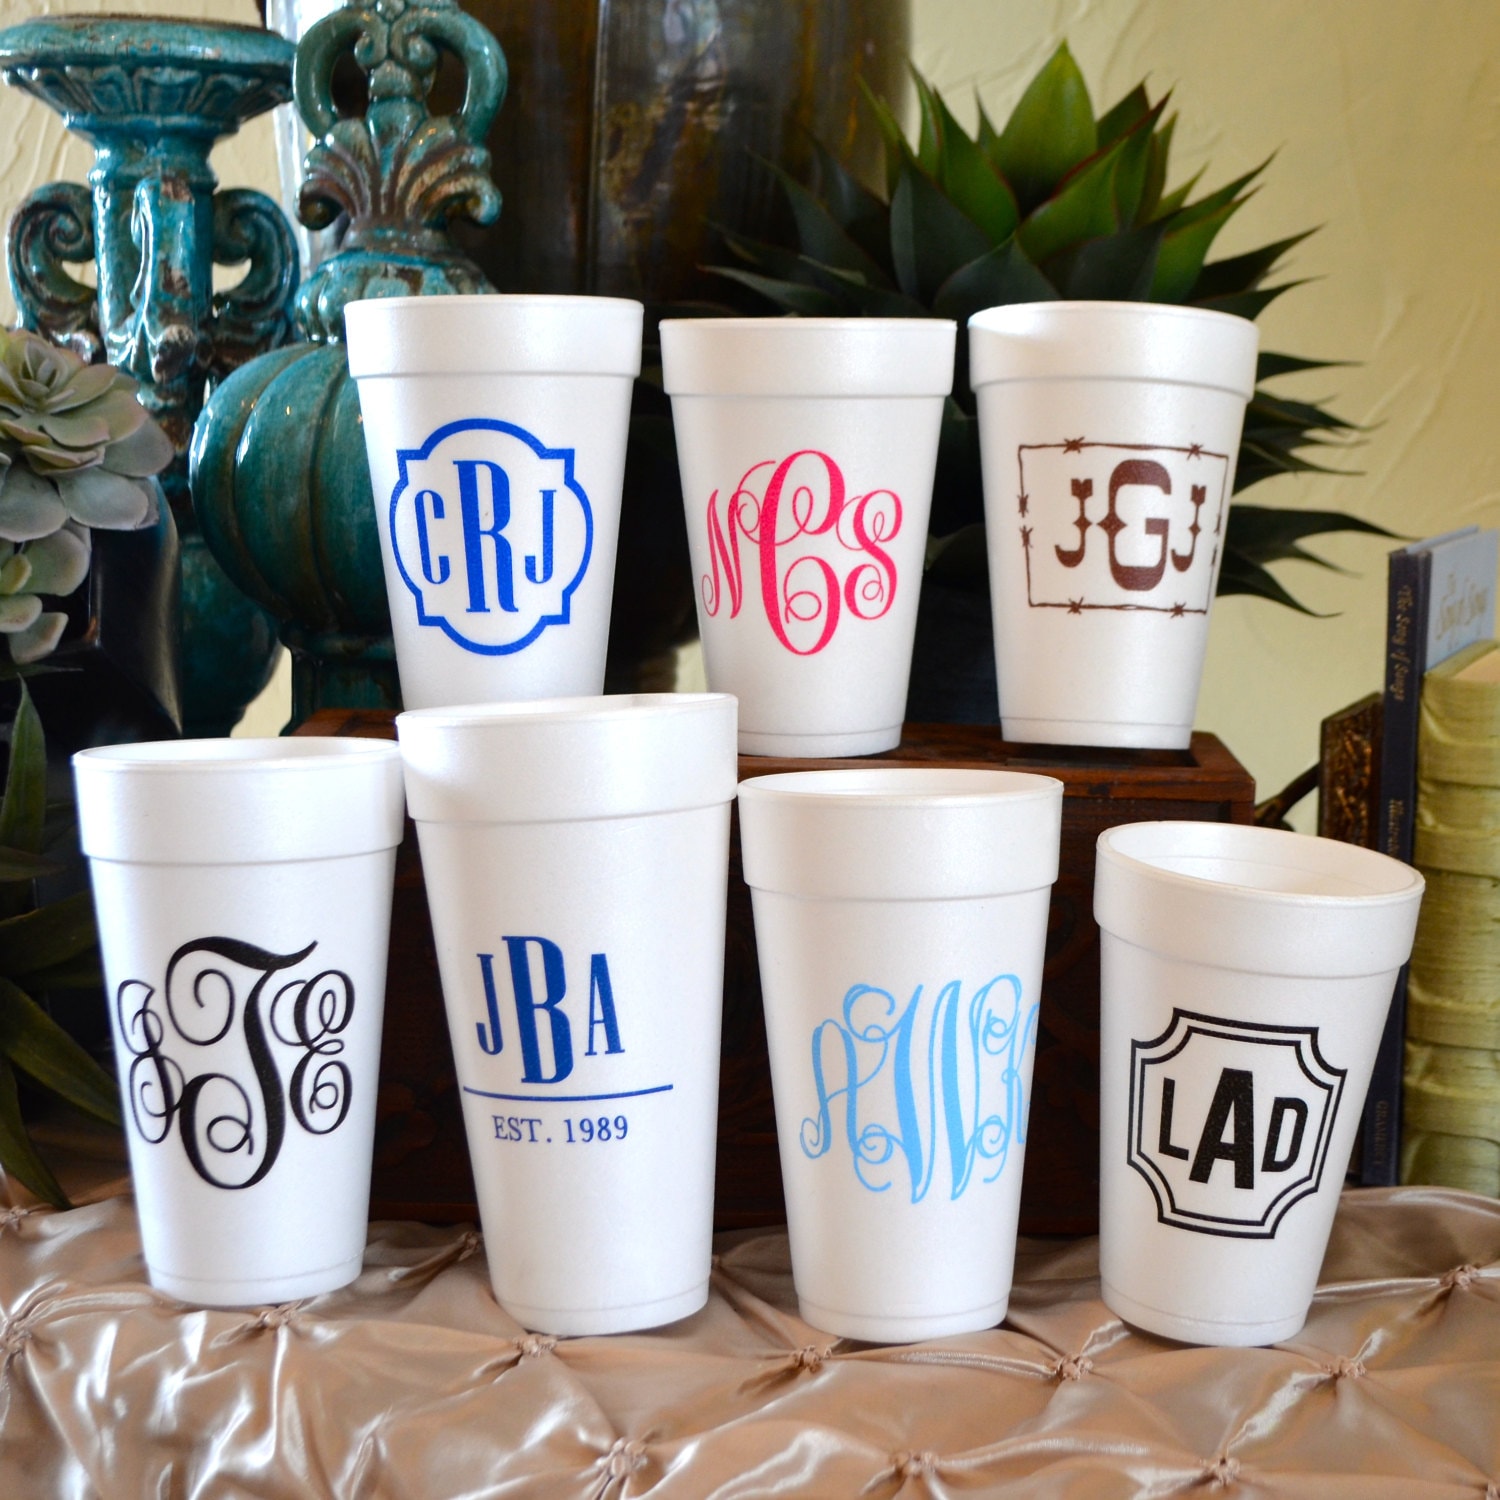 TikTok Custom Printed 16oz Foam Cups 50ct – JJ's Party House